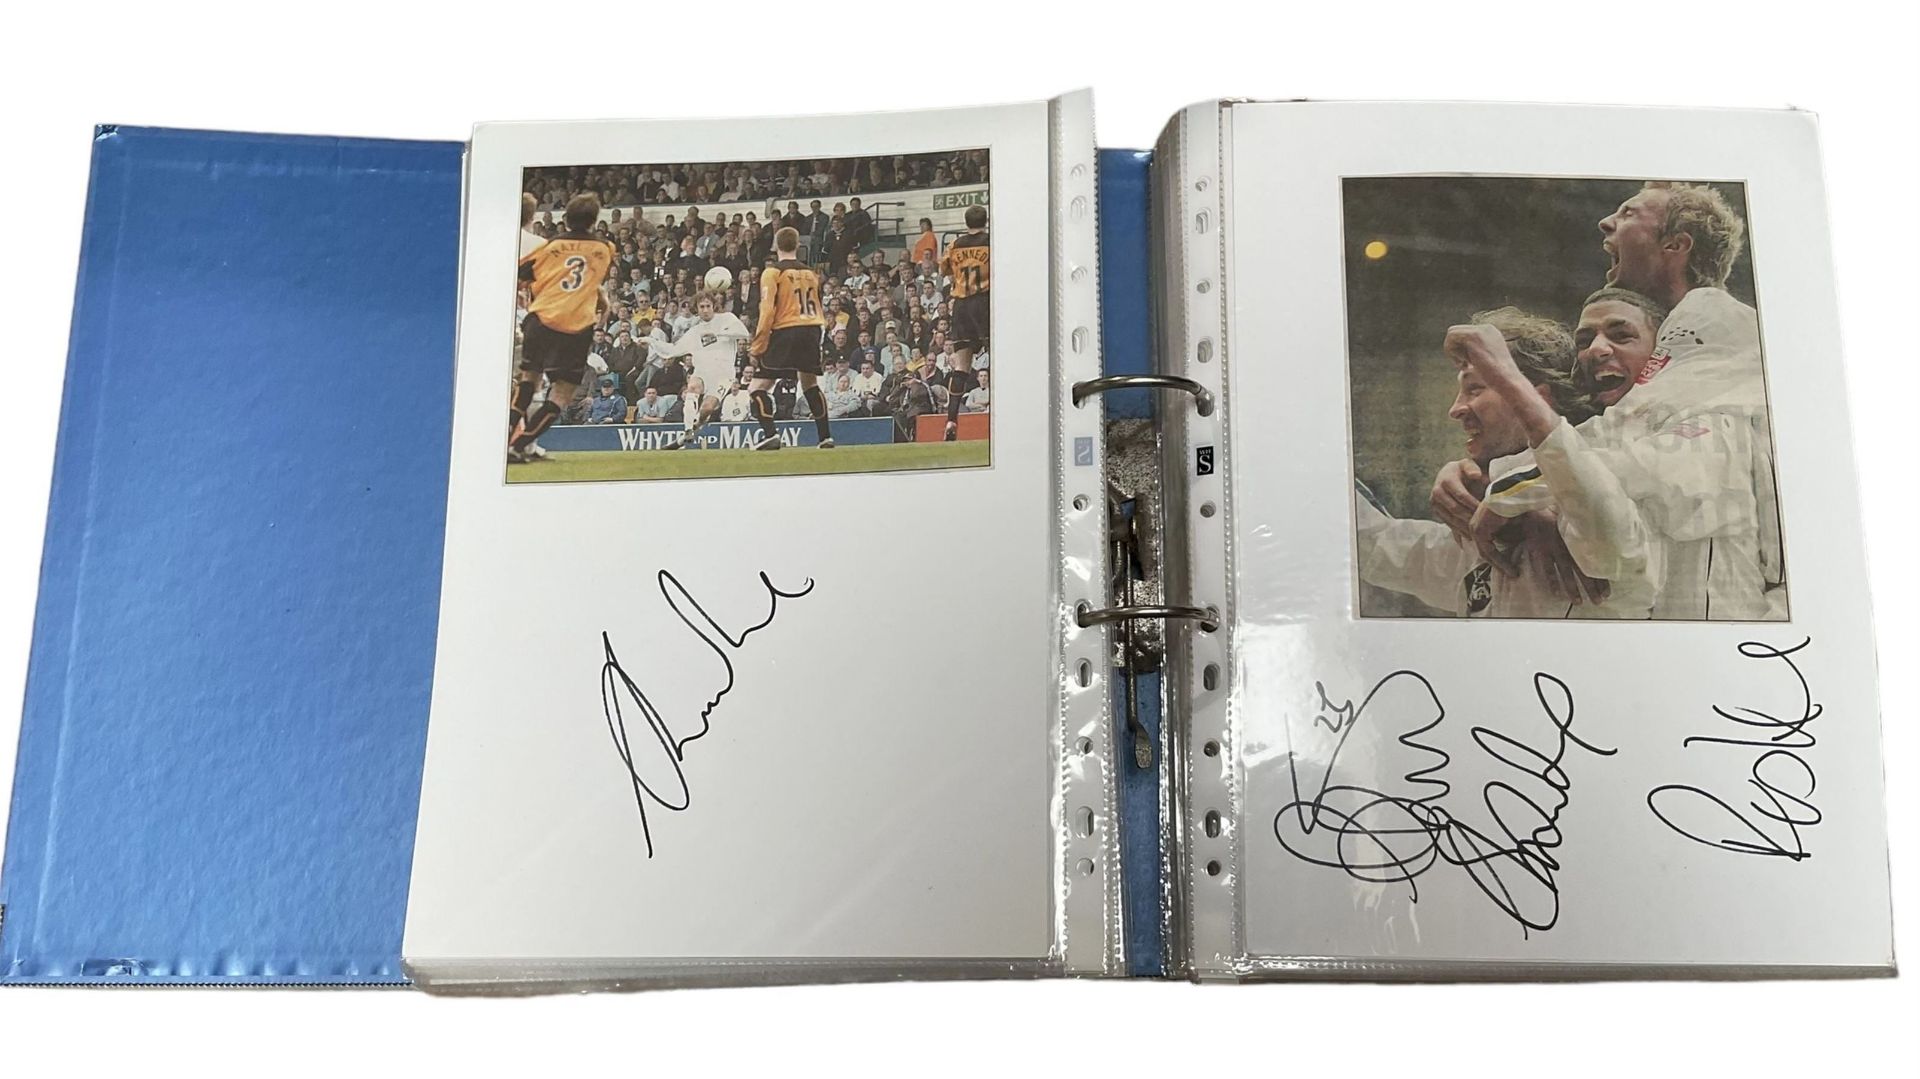 Leeds United football club - various autographs and signatures including Neil Sullivan